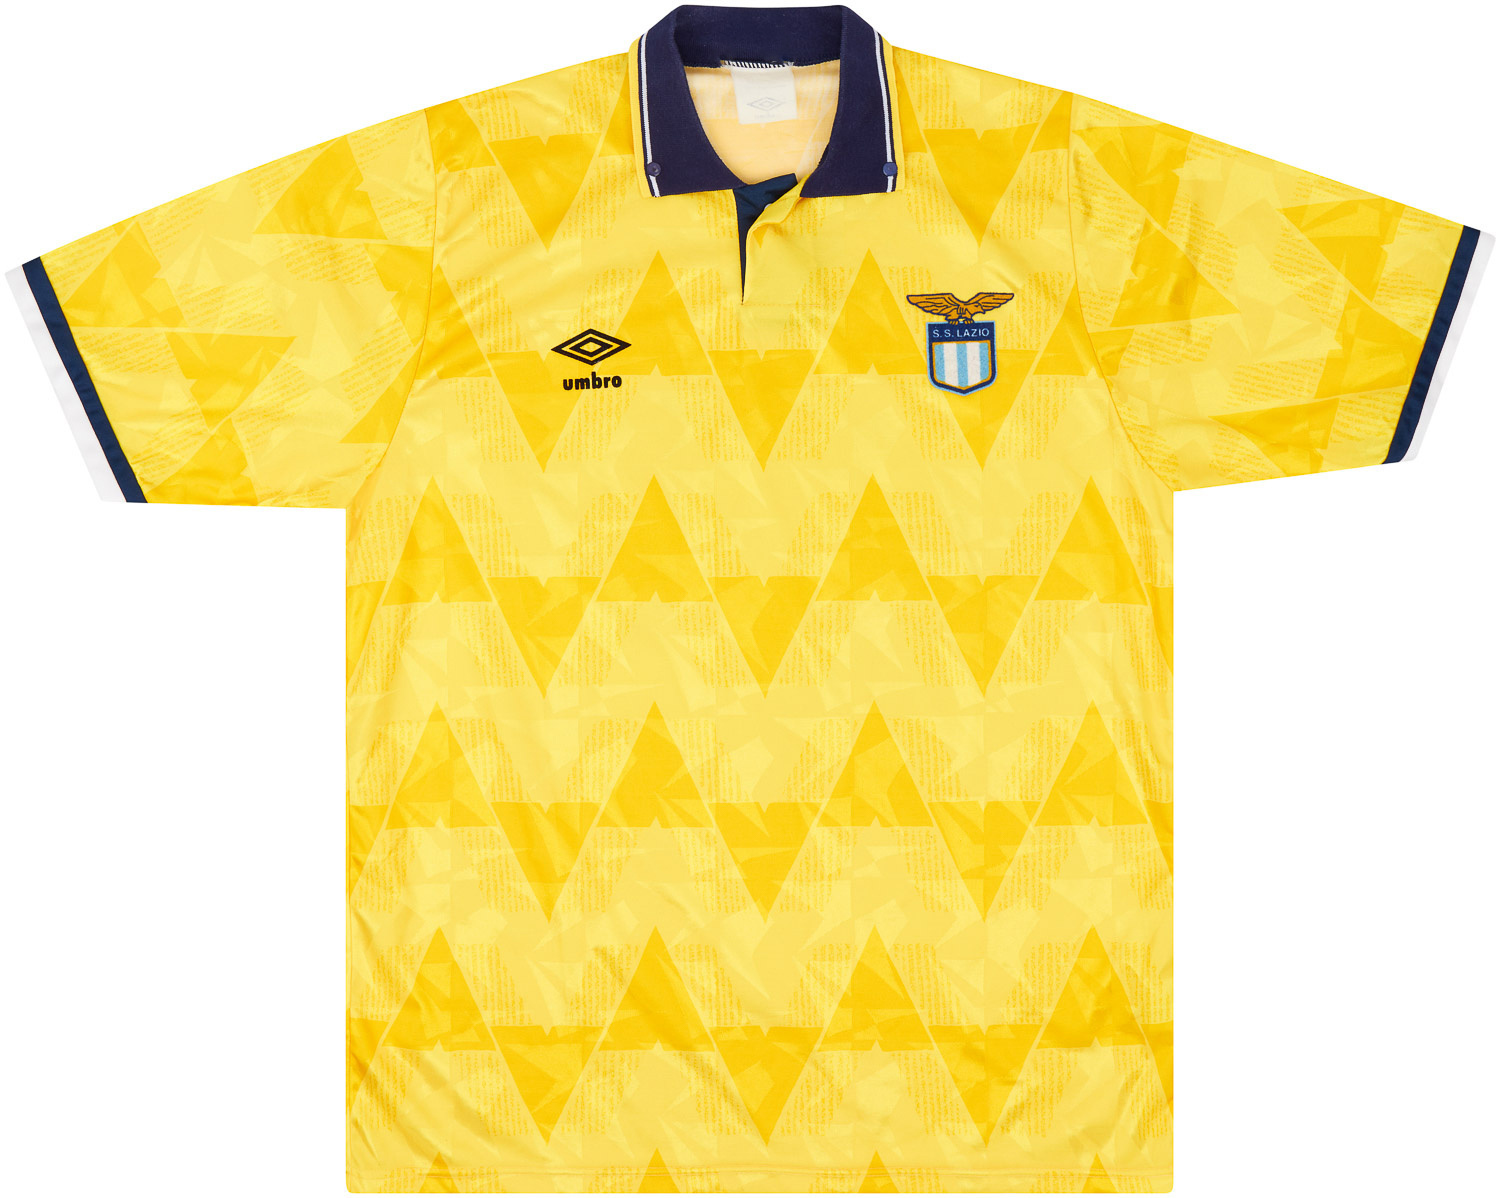 1989-91 Lazio Away Shirt - 8/10 - ()